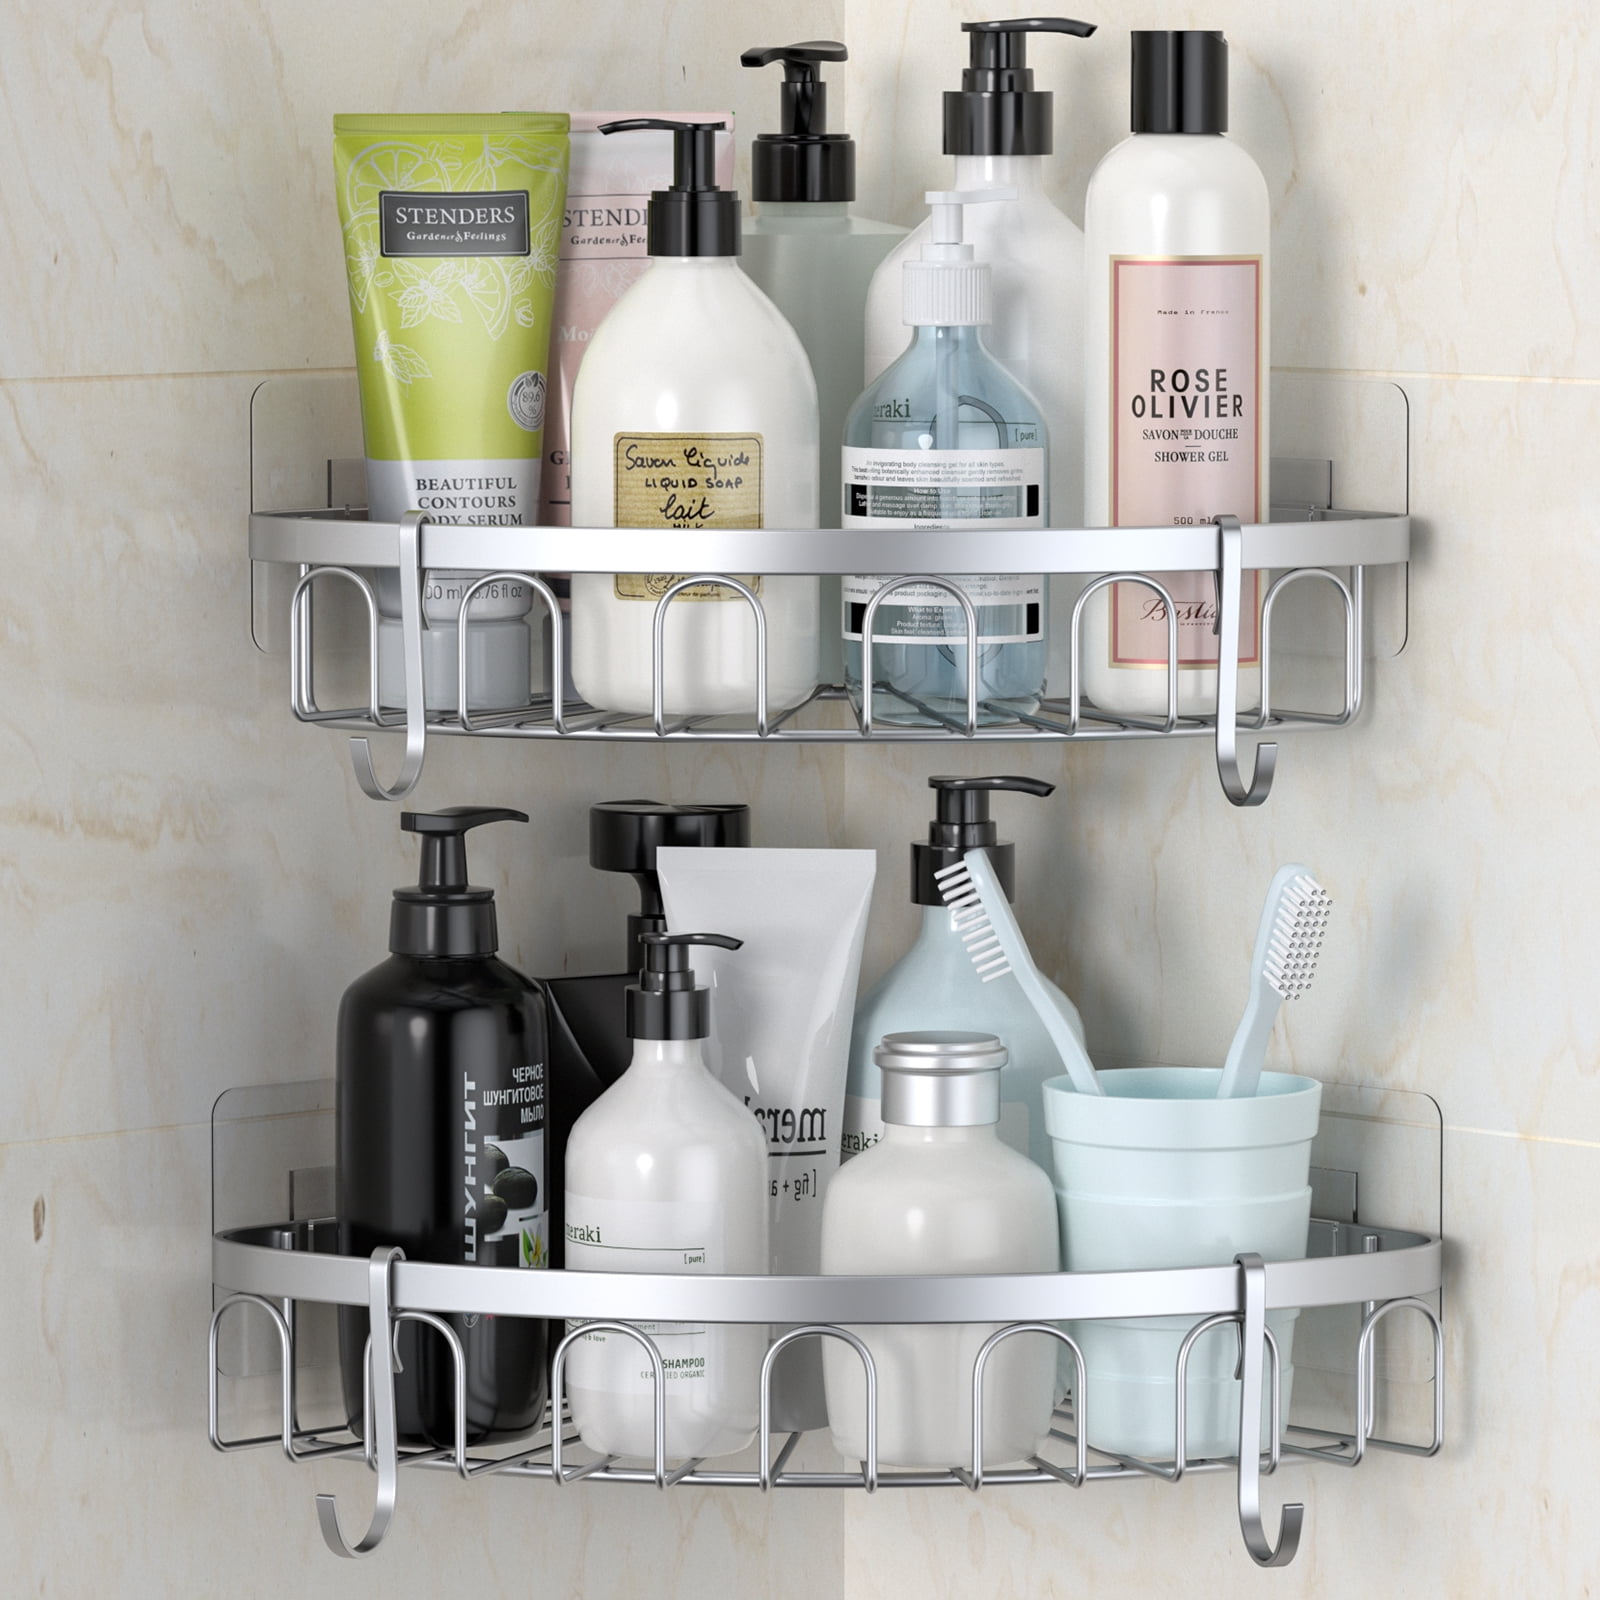 Shower Corner Shelf, Corner Shelf With Hooks 2-pack, Self-adhesive Glue,  Stainless Steel